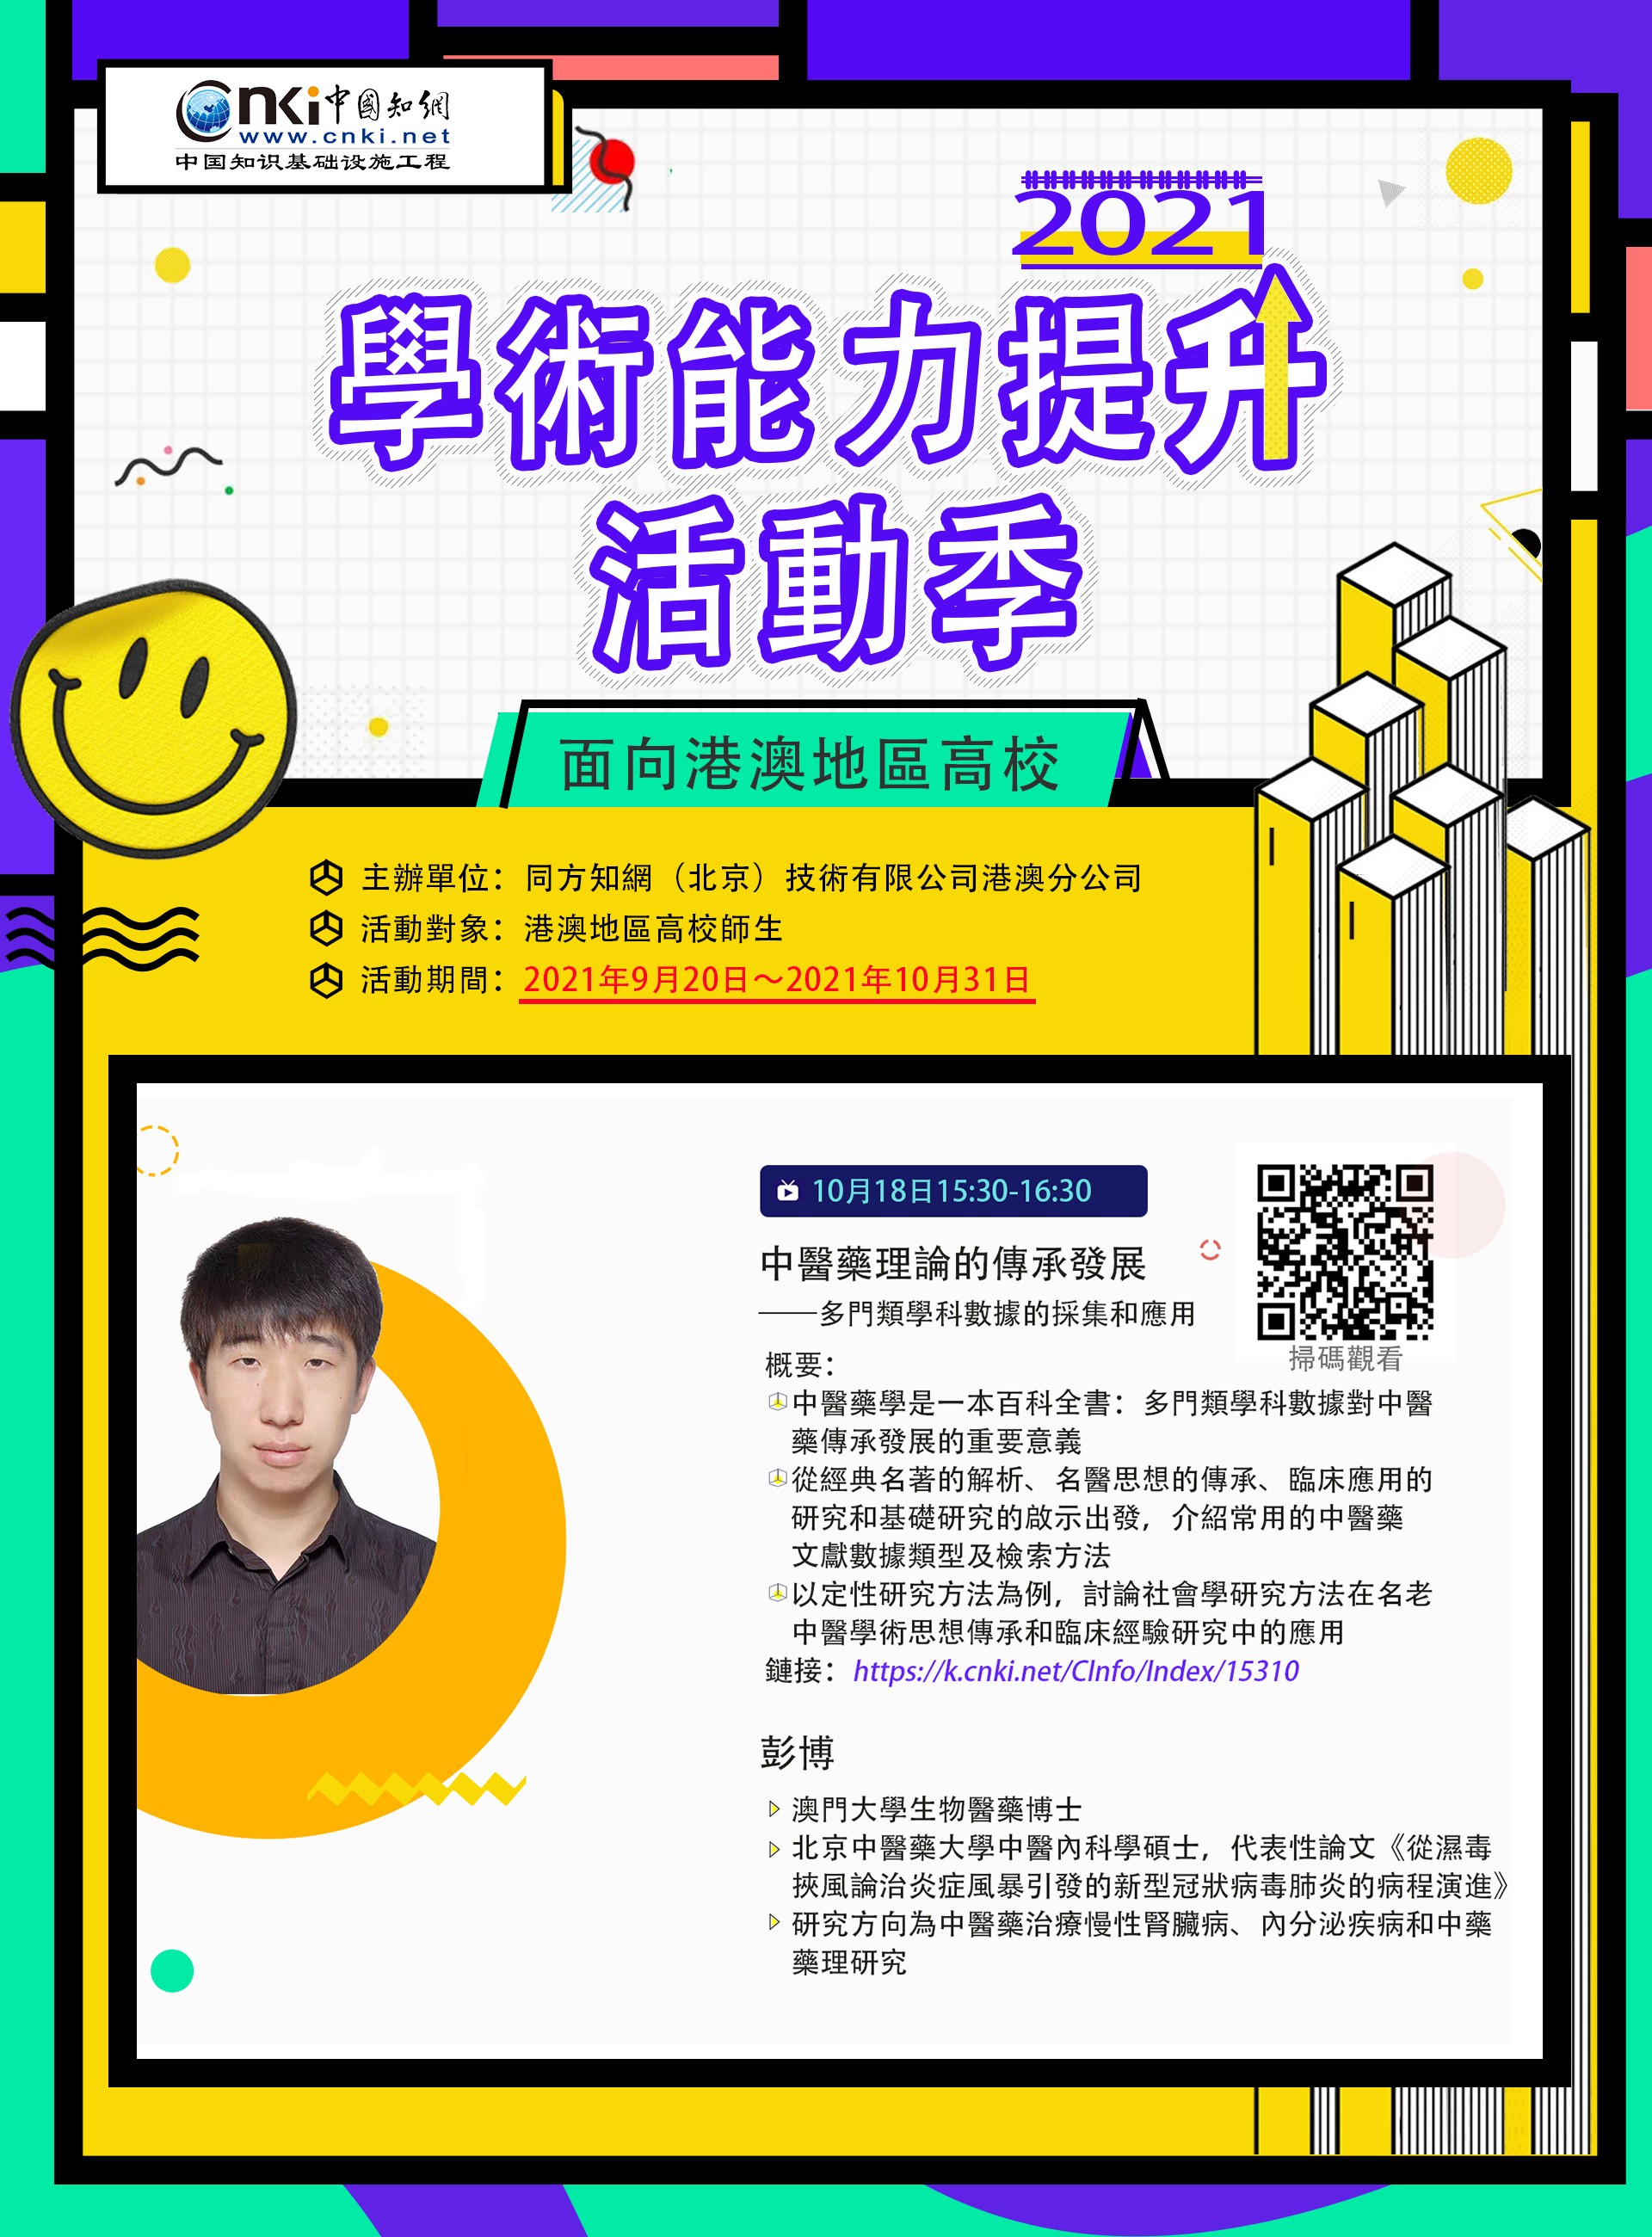 event-webinar-cnki-hkmo-20211018